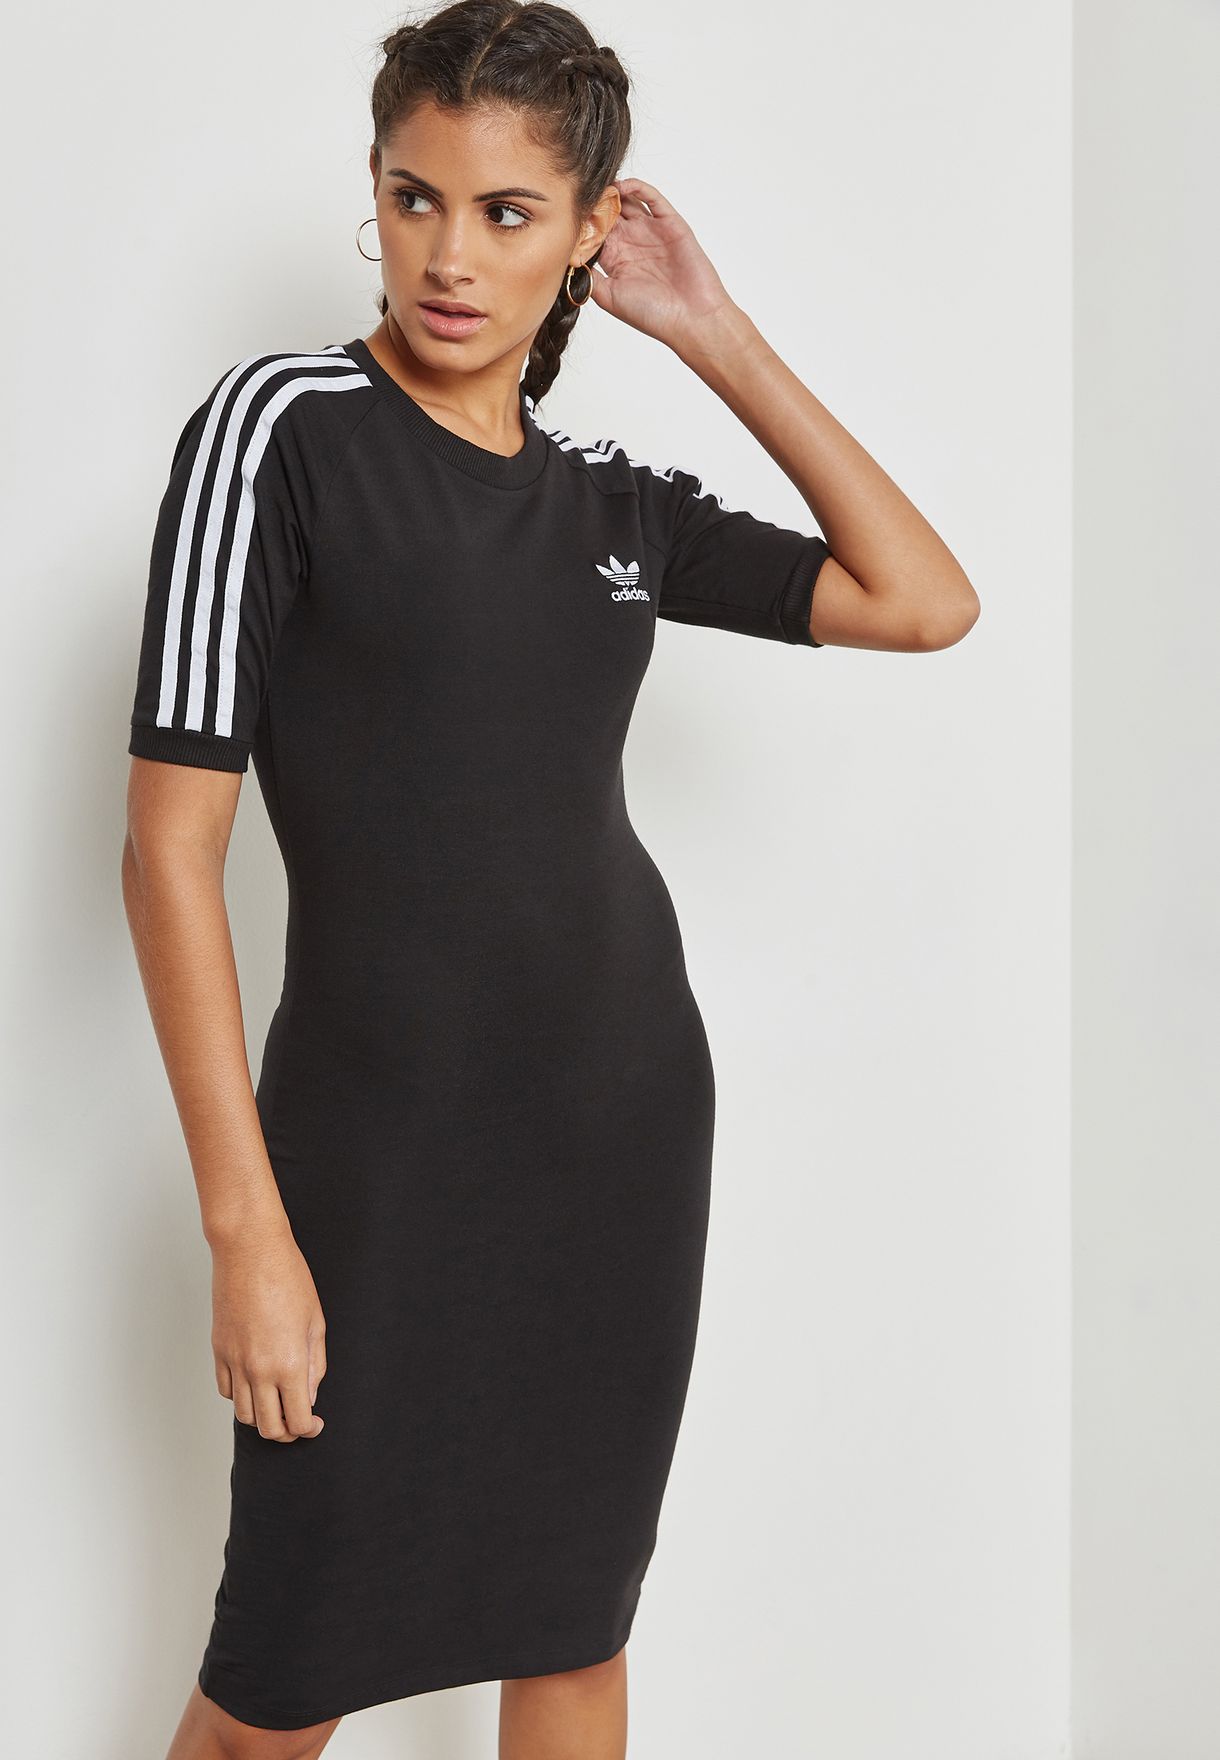 Buy Adidas Originals Black 3 Stripes Dress For Women In Mena Worldwide Dv2567